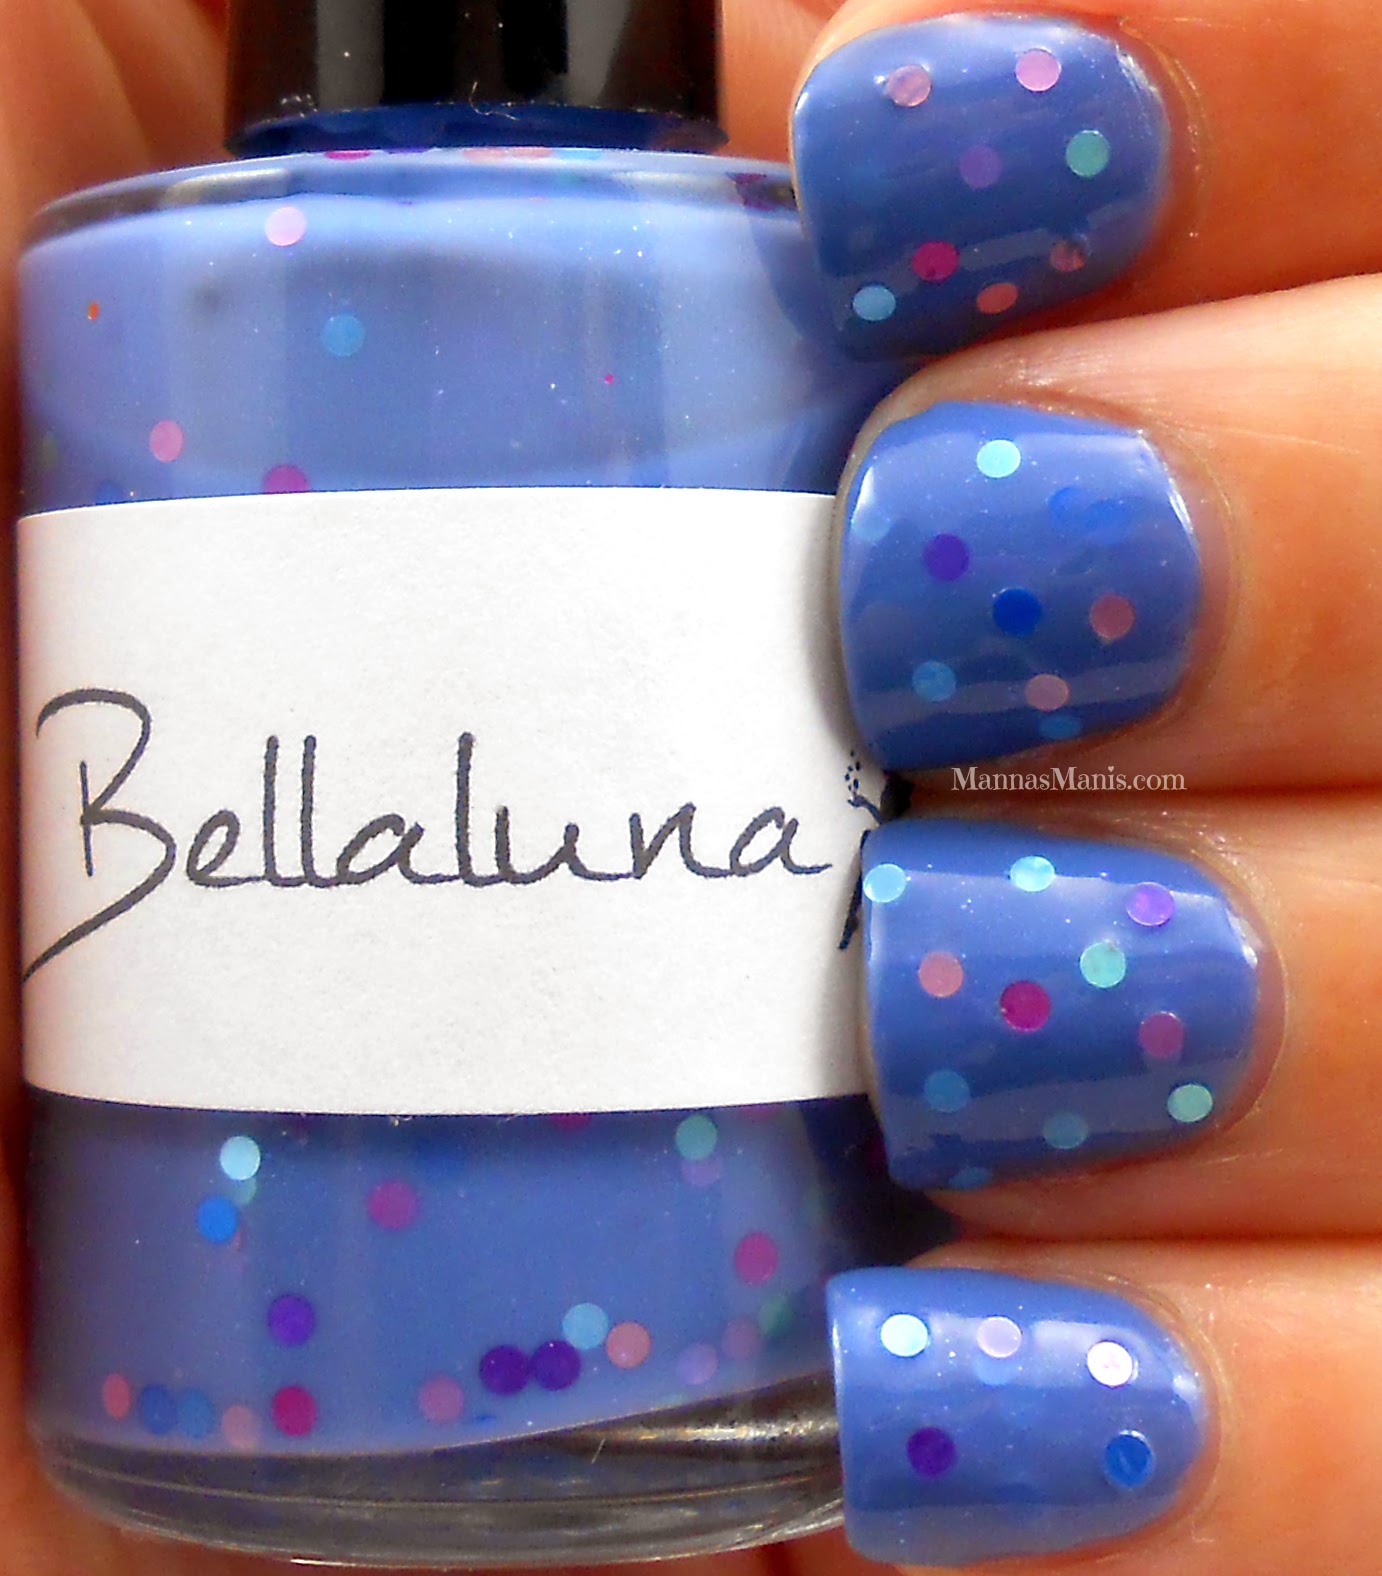 Bellaluna slumber party, a pale blue nail polish